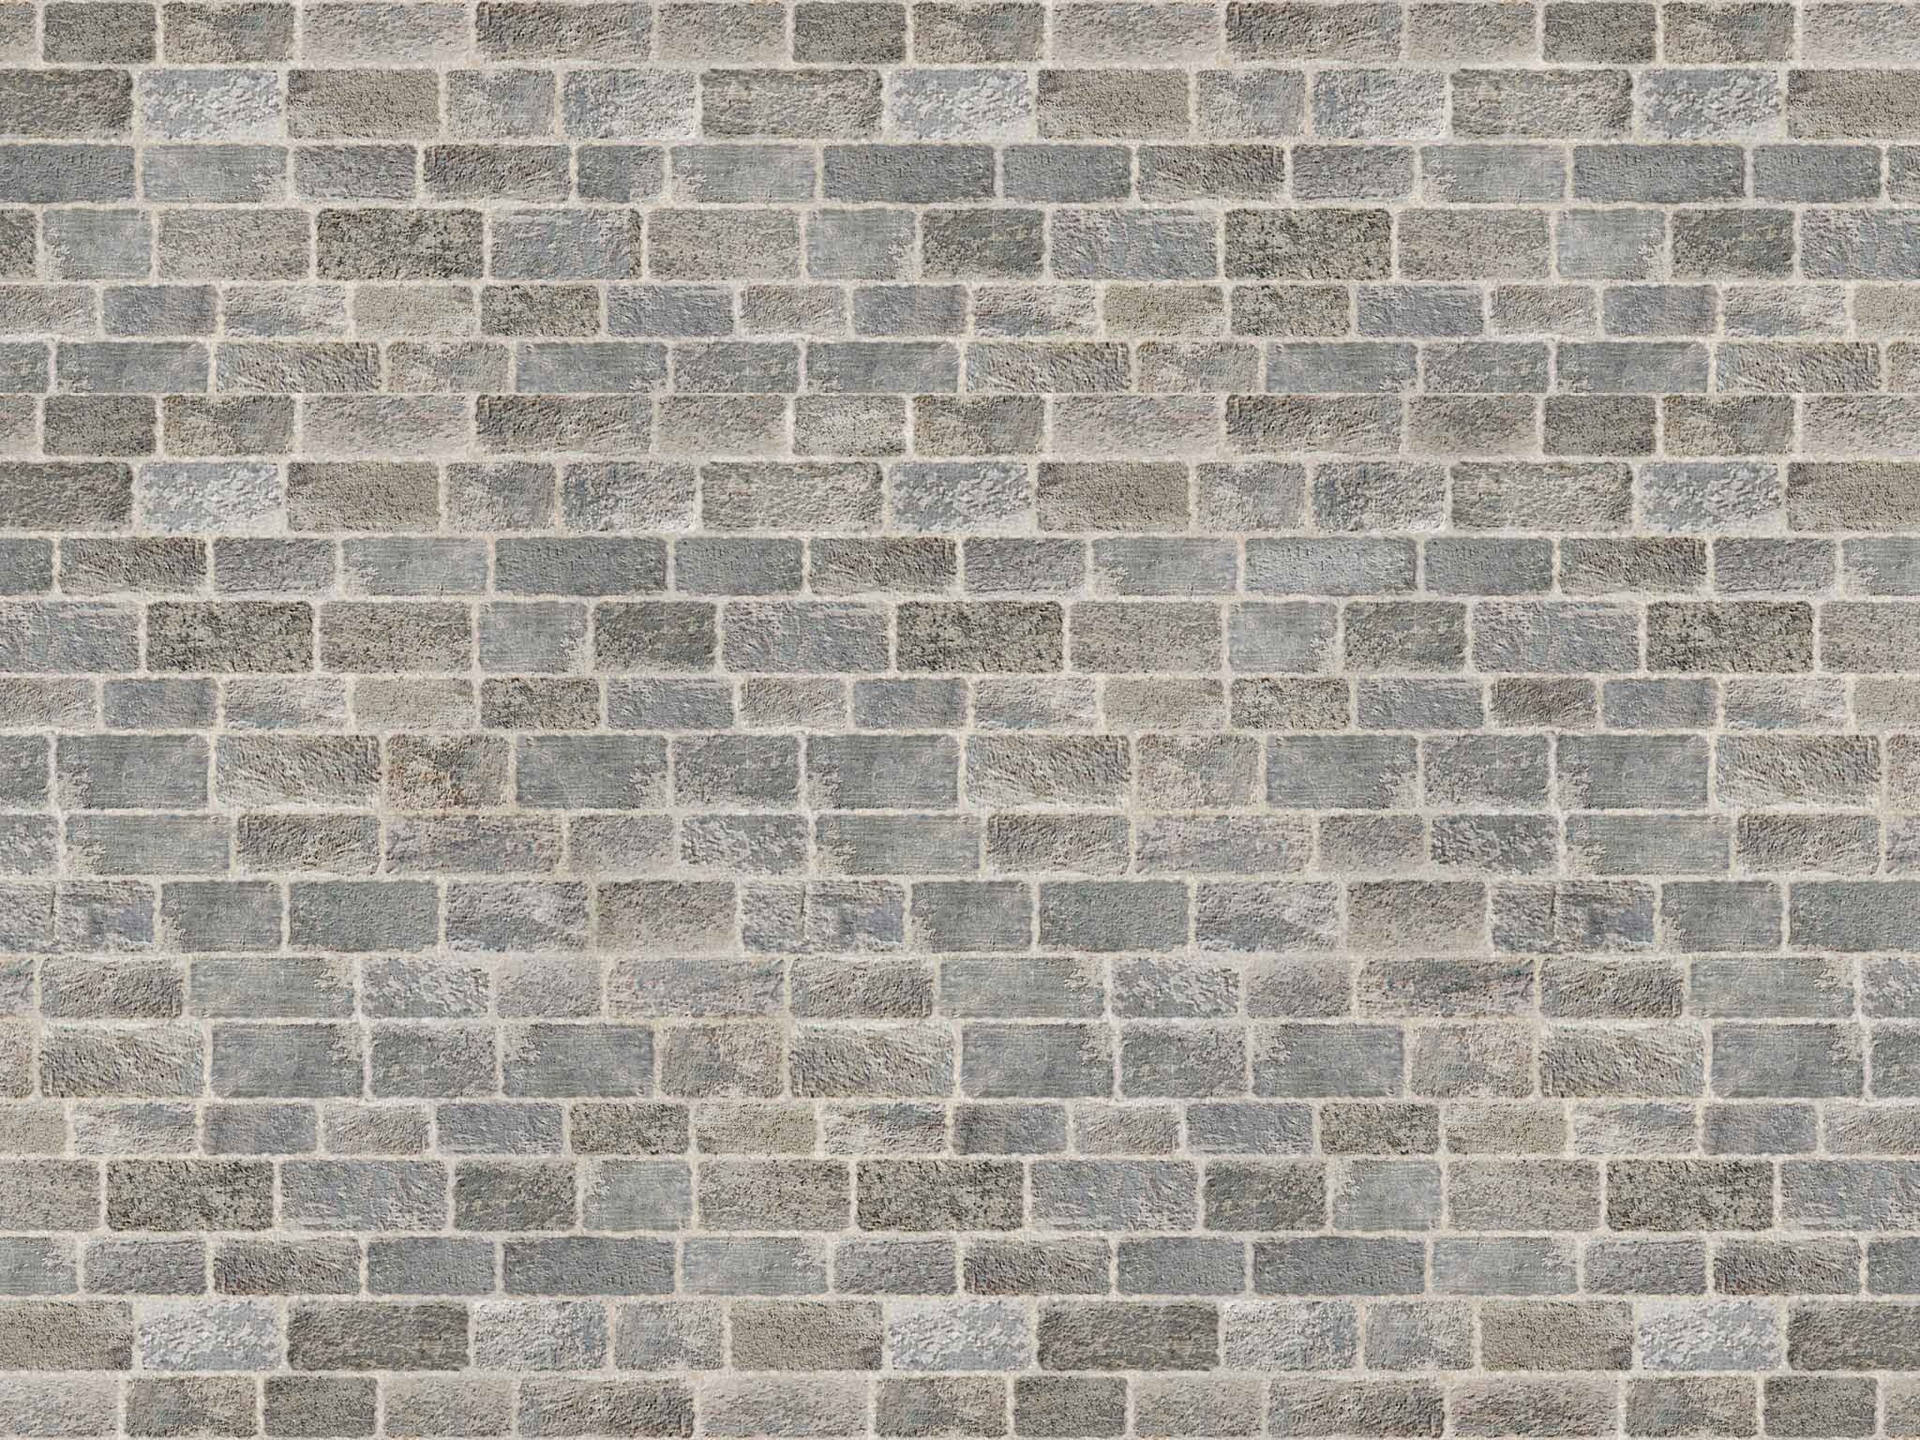 Concrete Texture Wall Brick Wallpaper